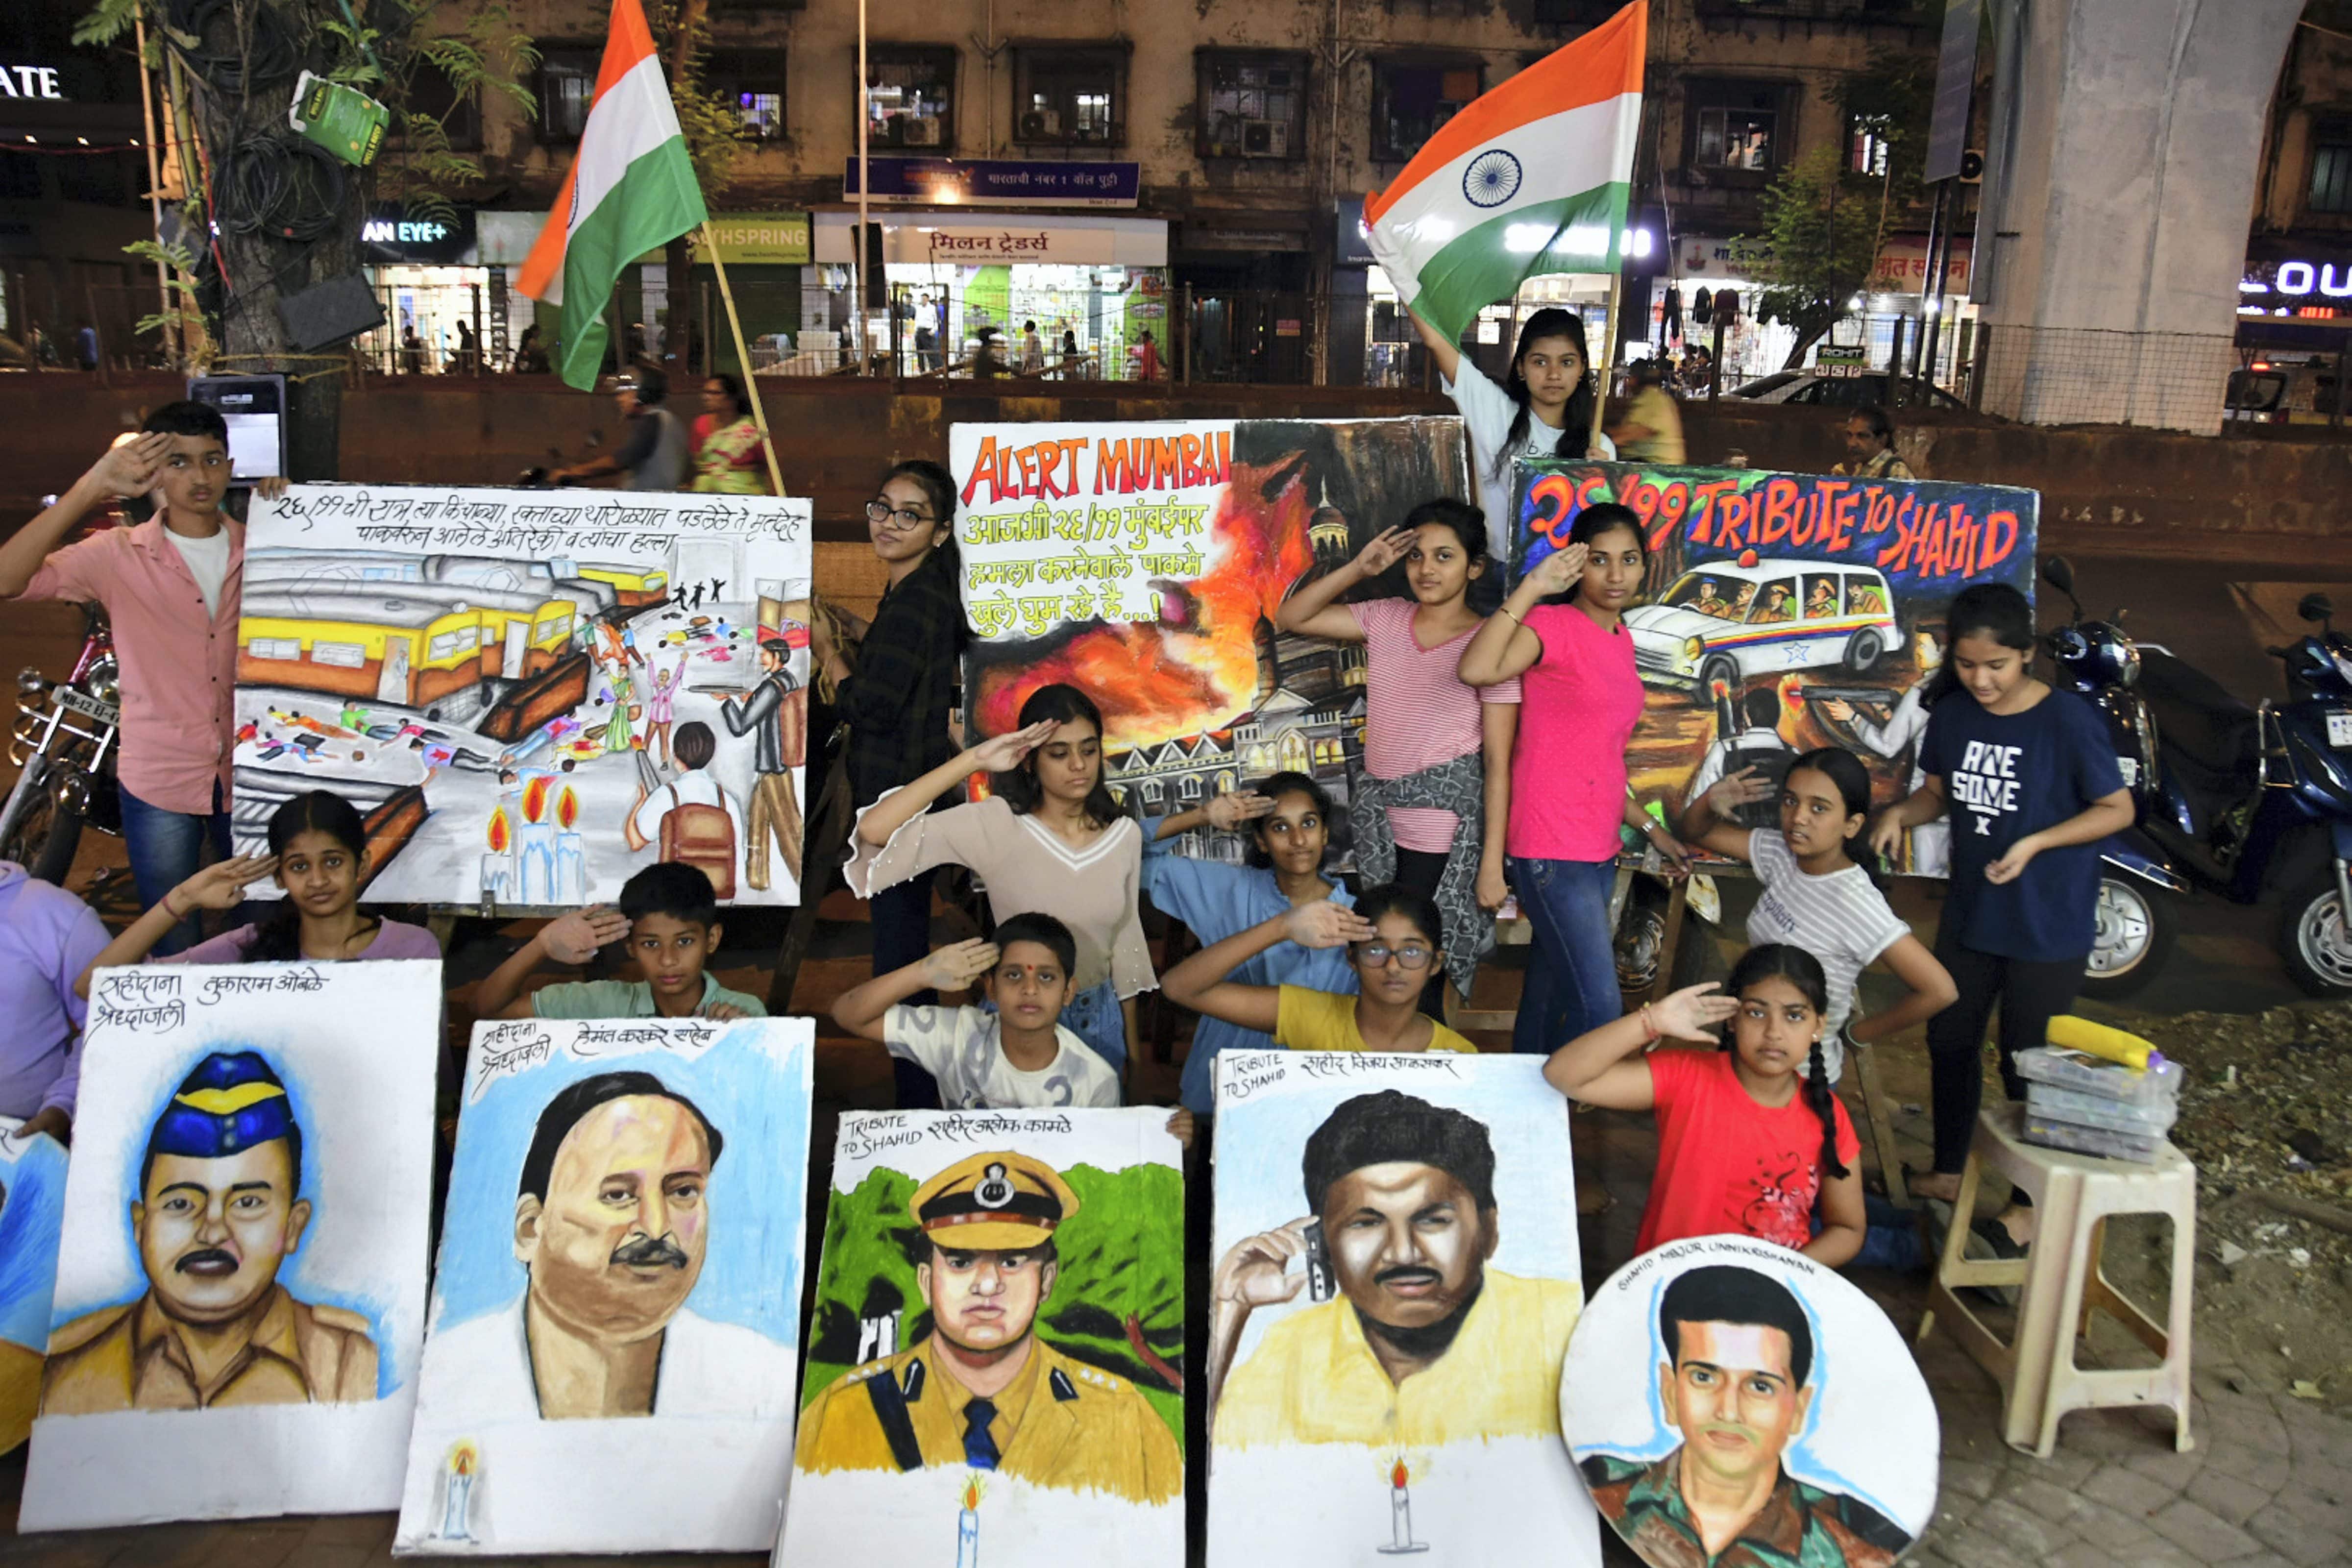 Mumbai 26/11 Attacks: Art students pay their tributes